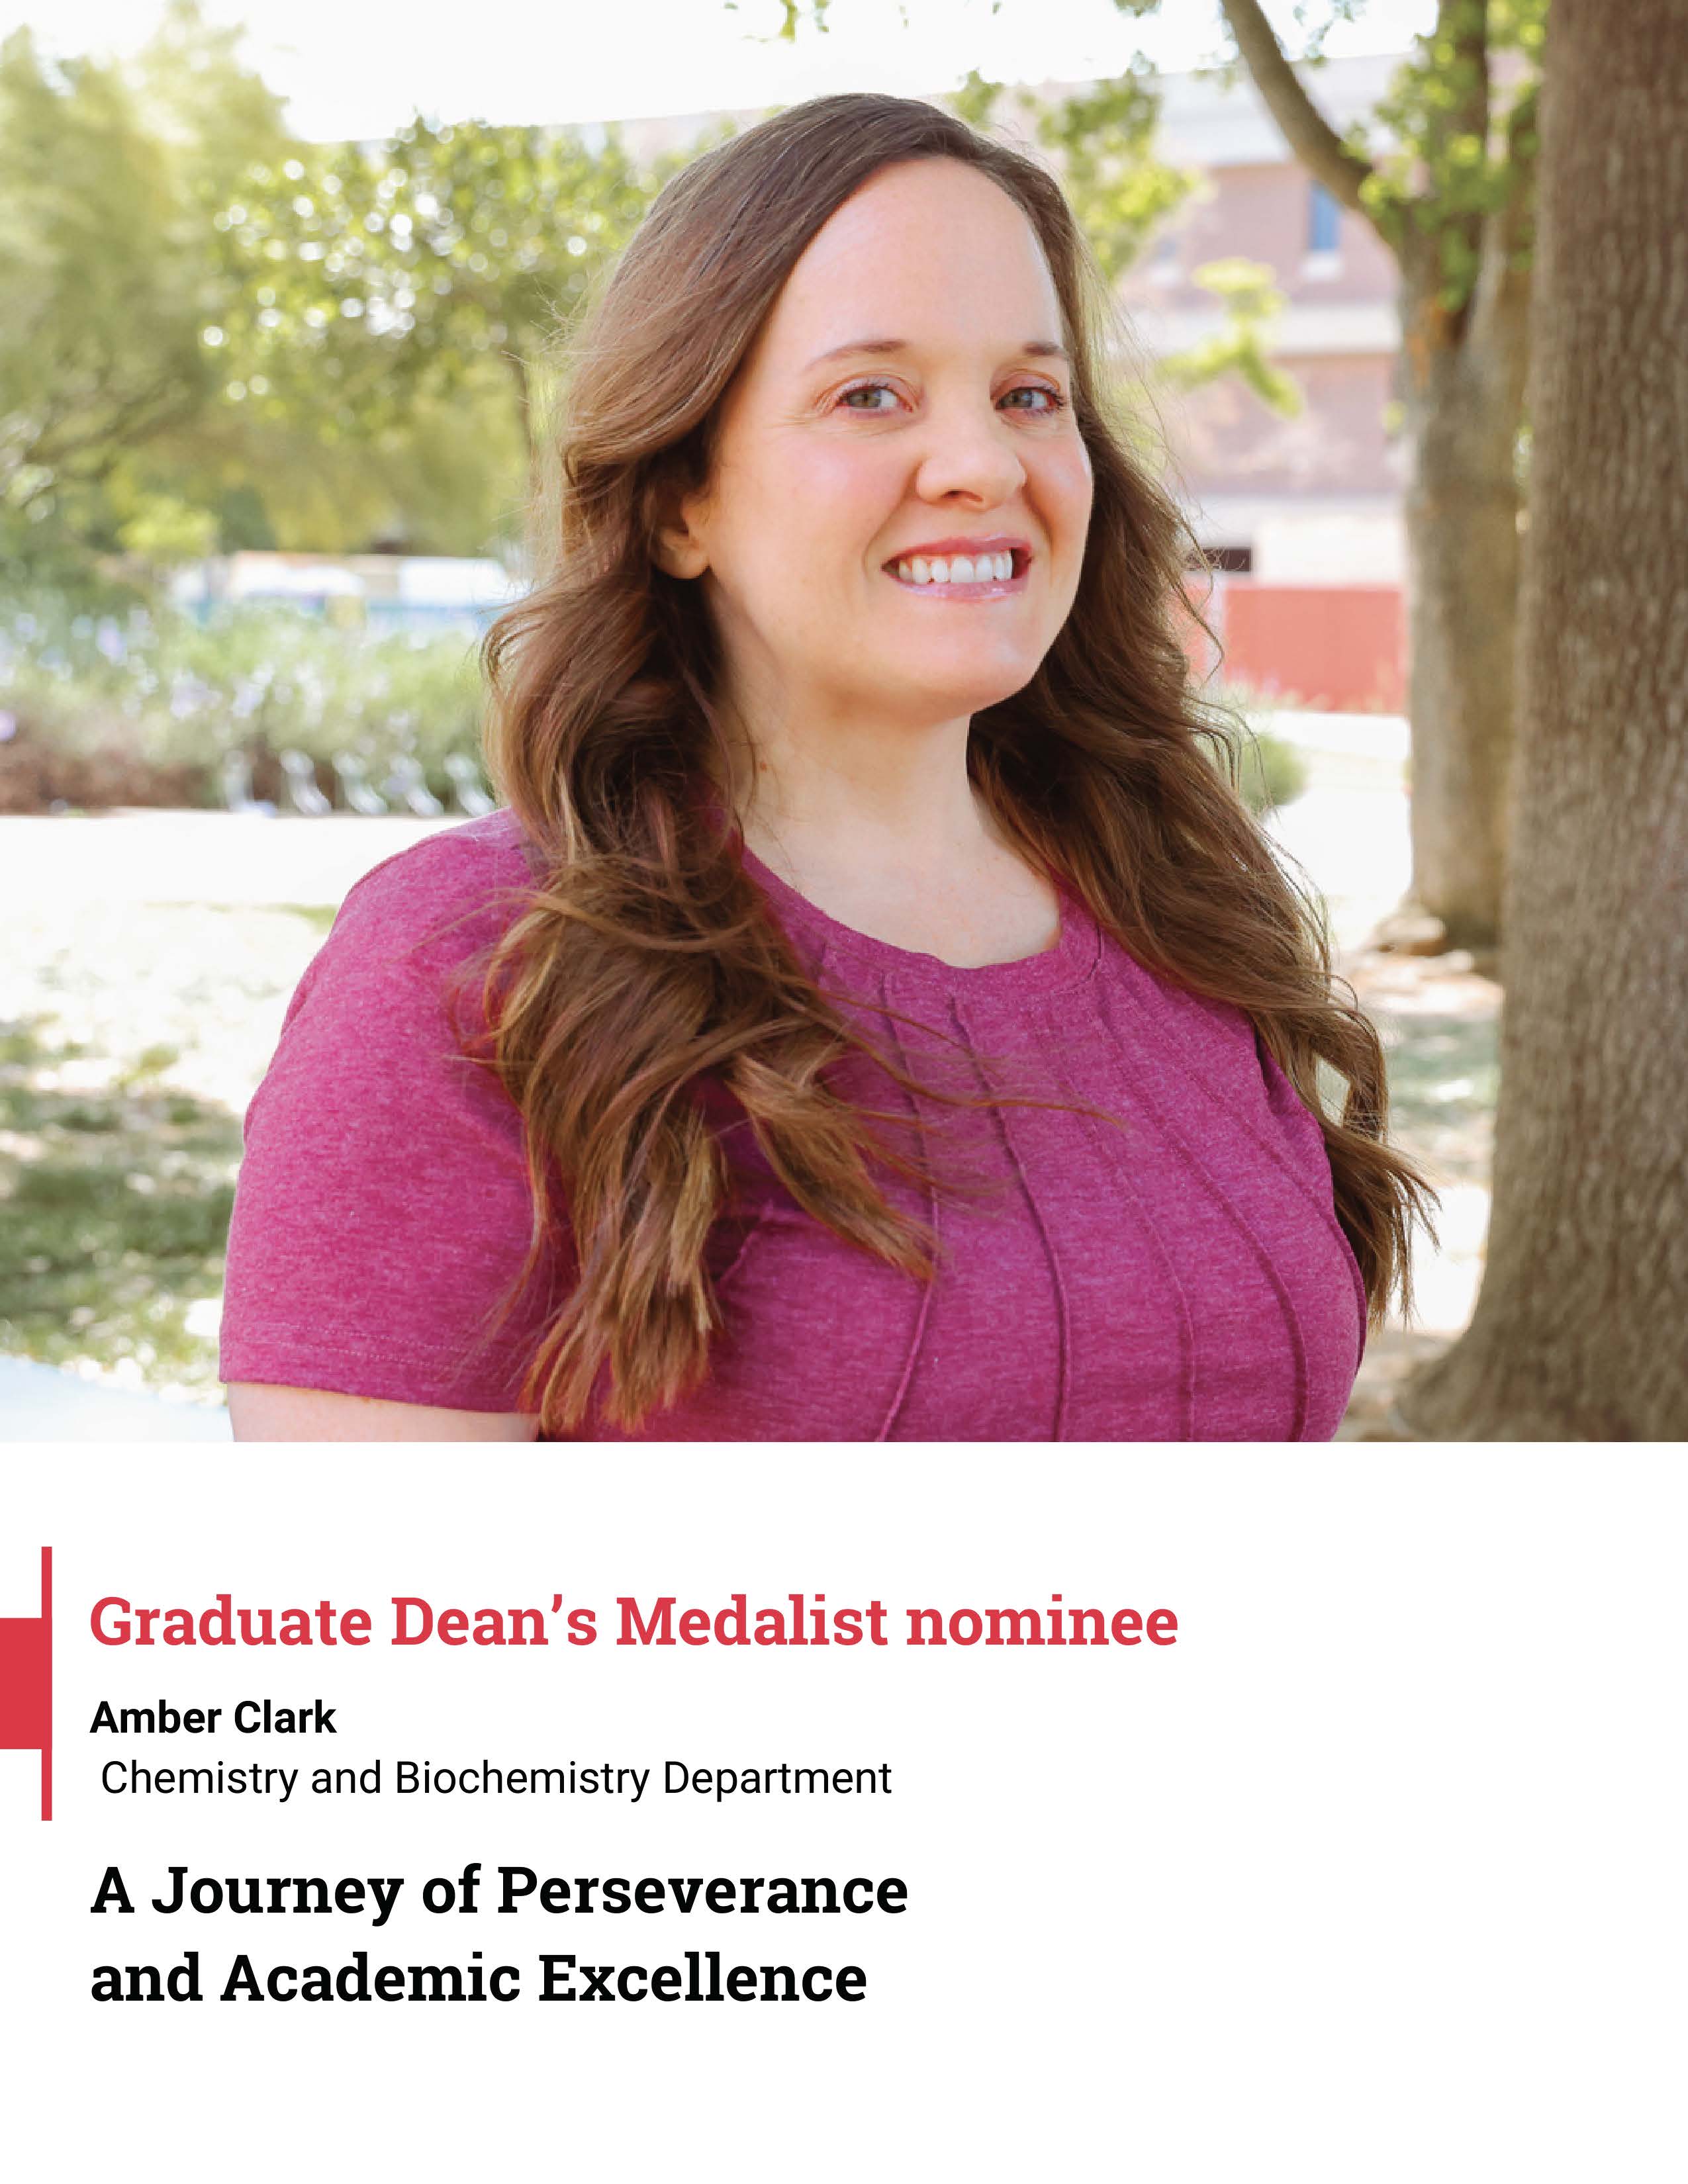 Graduate Dean's Medalist nominee Amber Clark